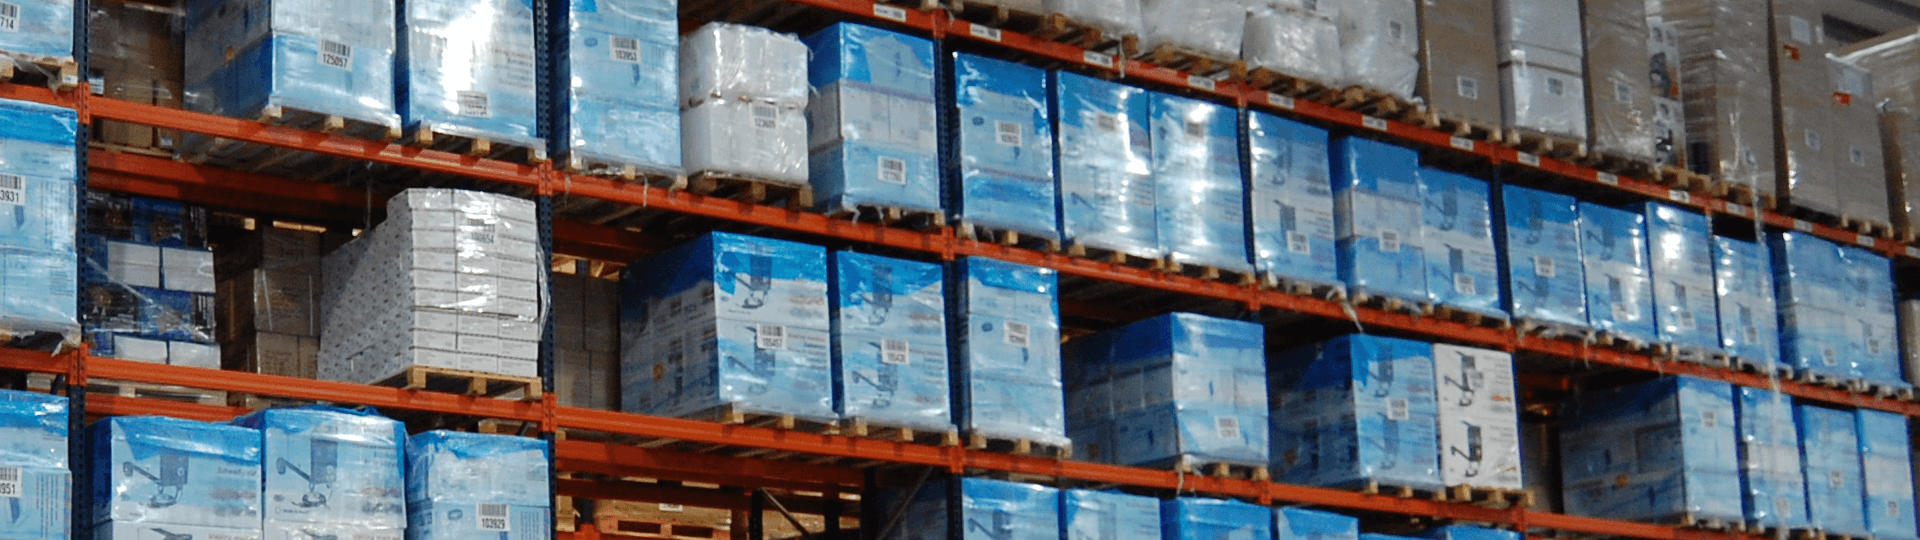 ecommerce inventory management software Blue Stout